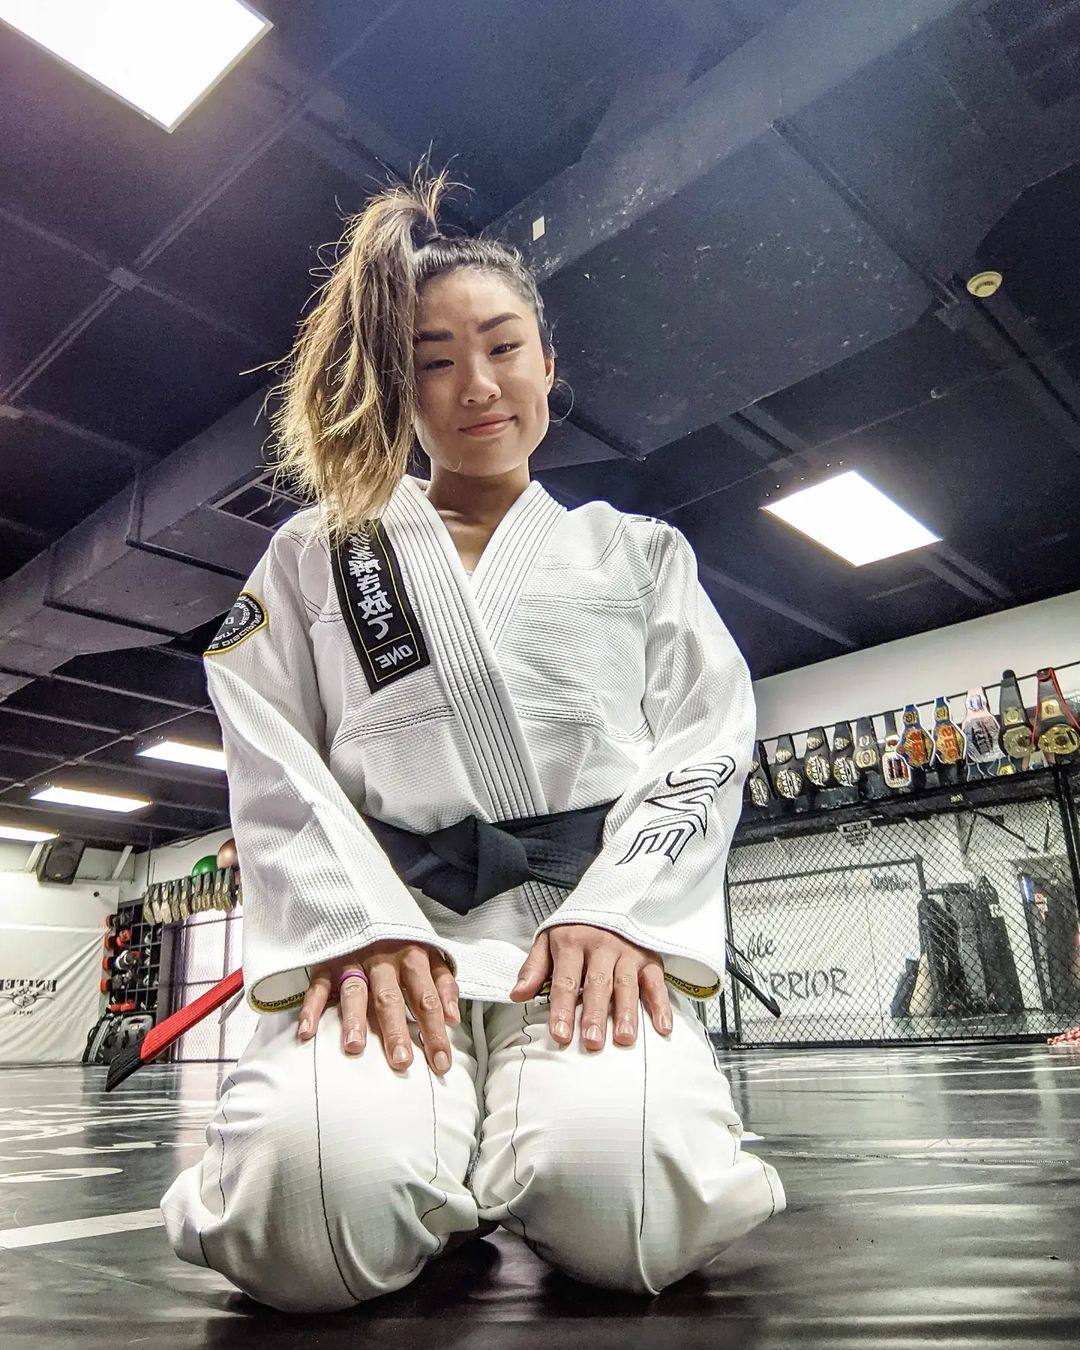 Angela Lee during training. Photo: Instagram/@angelaleemma